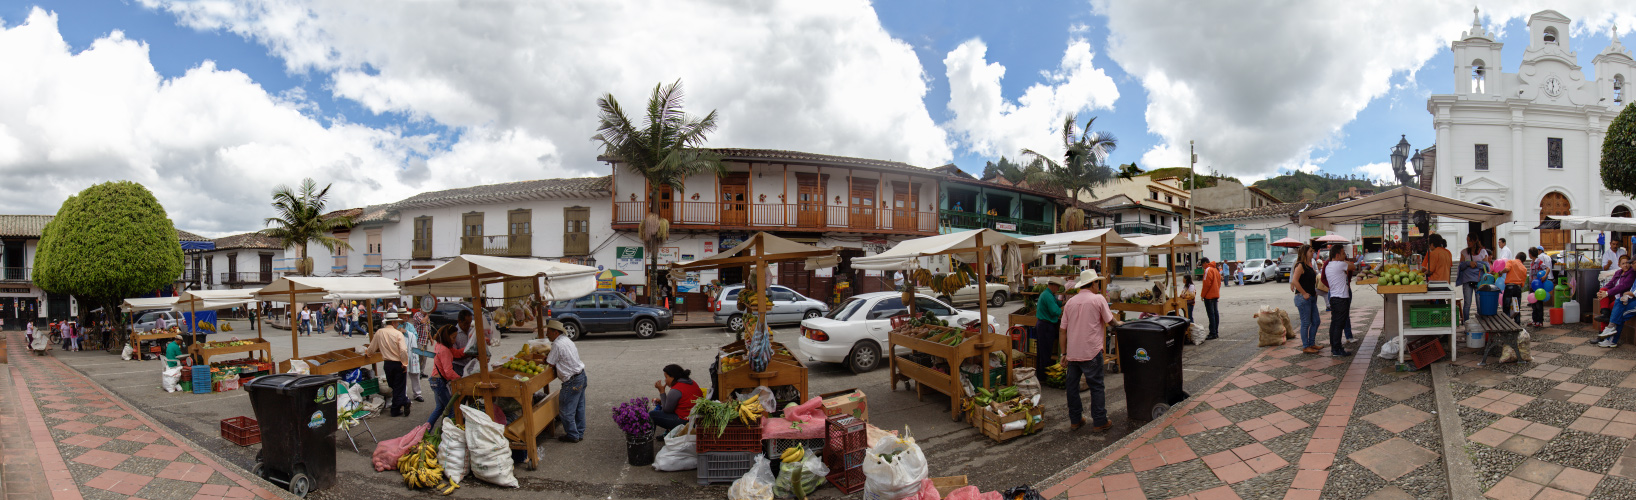 Samstagsmarkt im Dorf